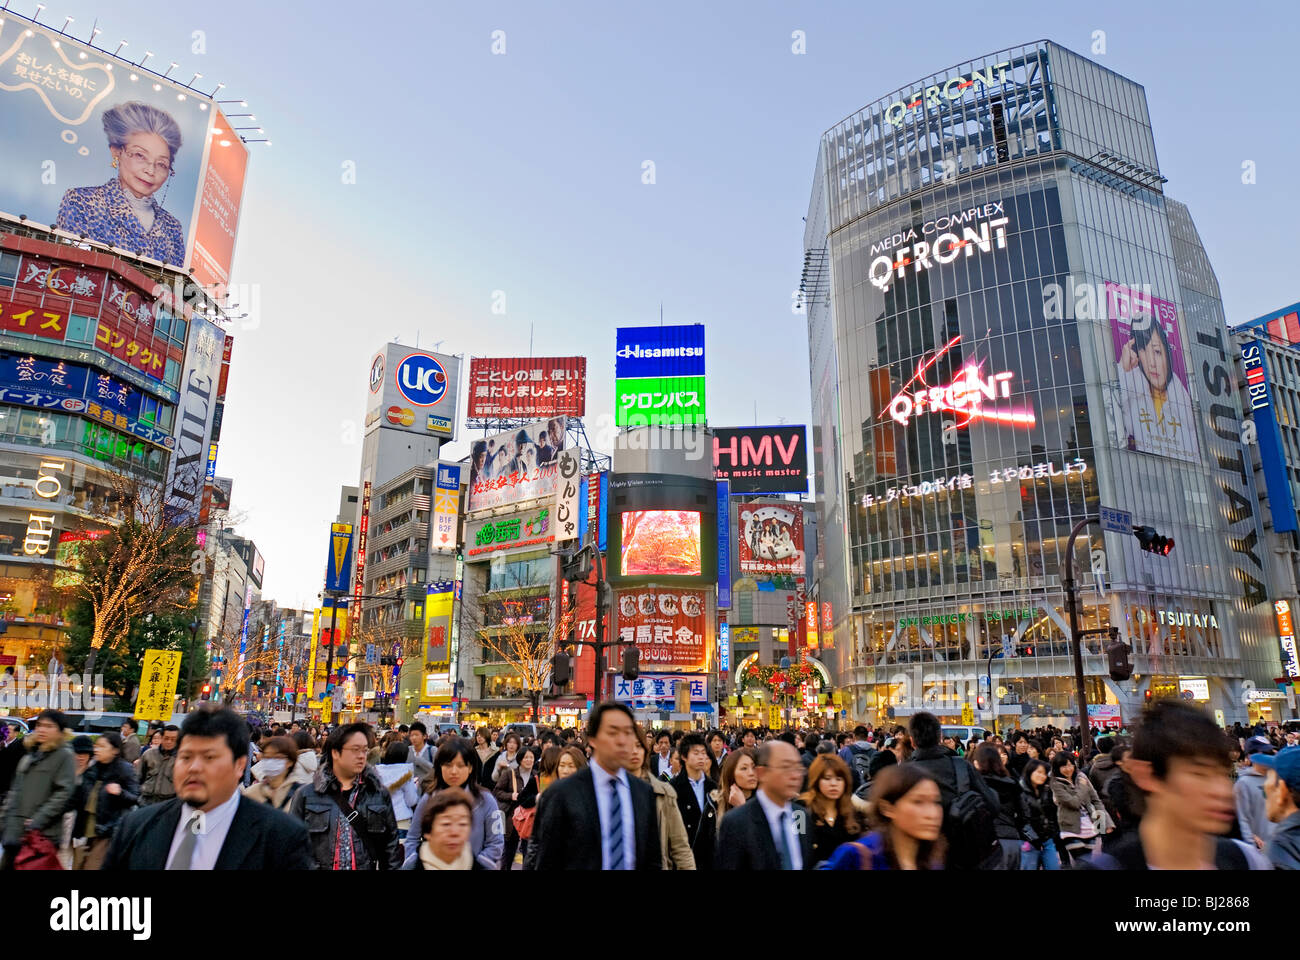 Shibuya Crossing Hachiko Square Tokyo Japan Neon Advertising Billboards Foto de stock